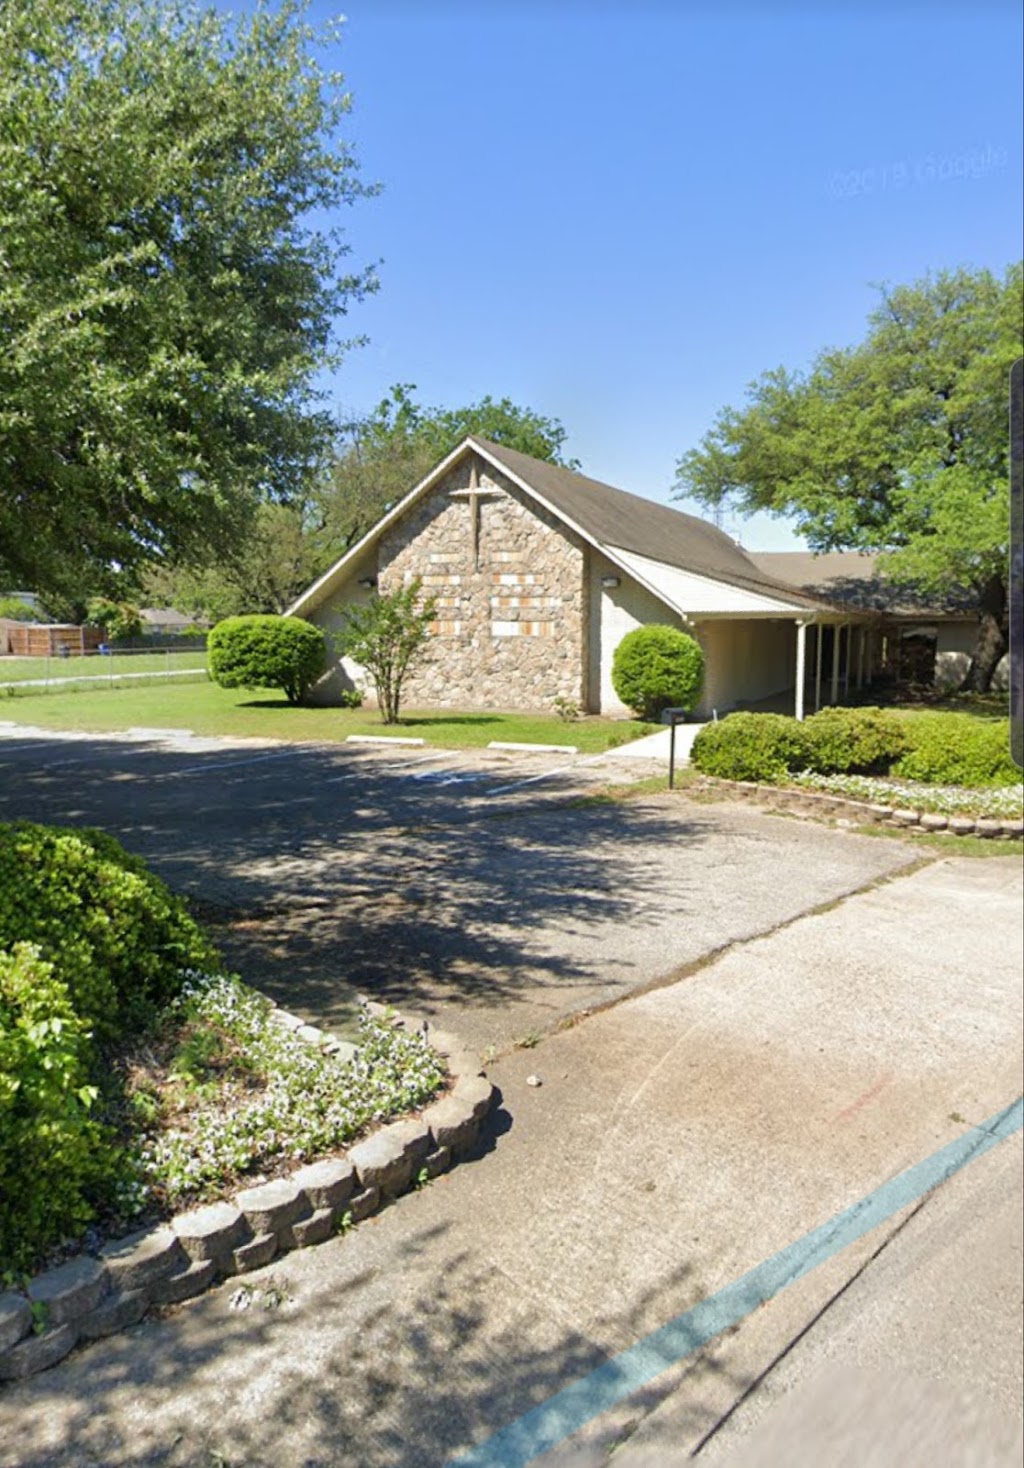 North Dallas Church of the Nazerene | 10303 Webb Chapel Rd, Dallas, TX 75229, USA | Phone: (214) 351-3027